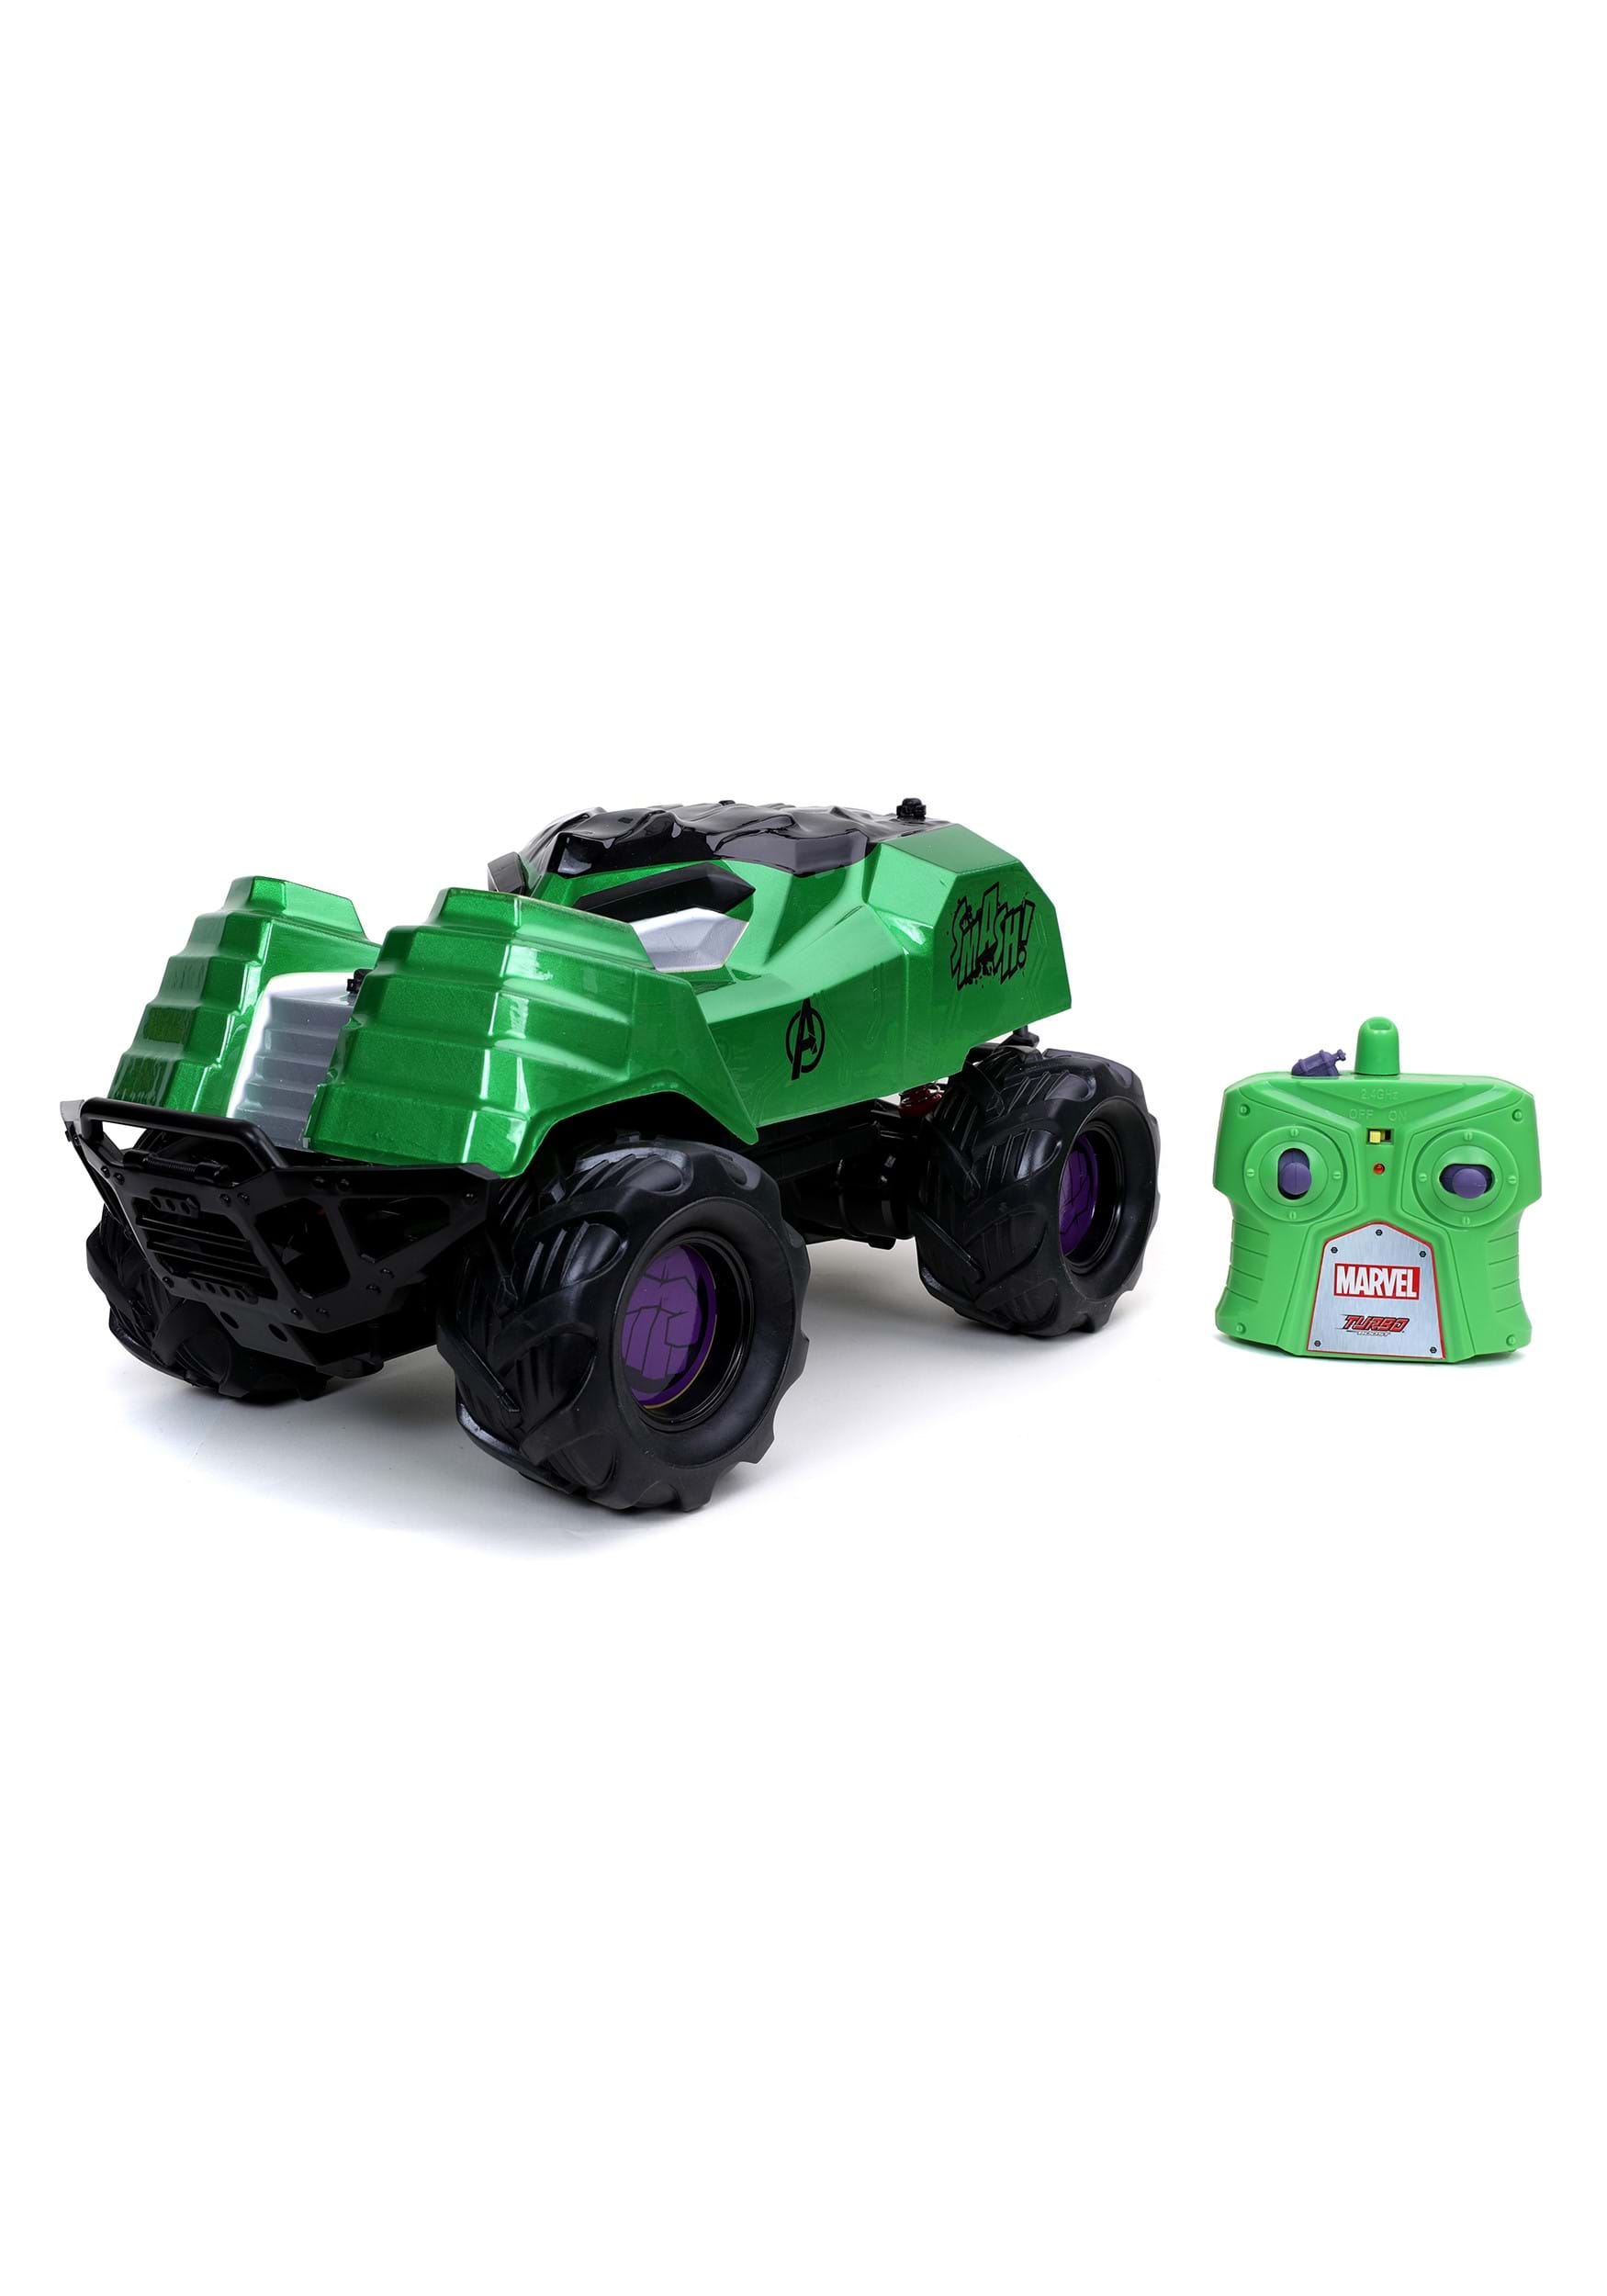 1:14 Marvel Scale RC Hulk Smasher Truck